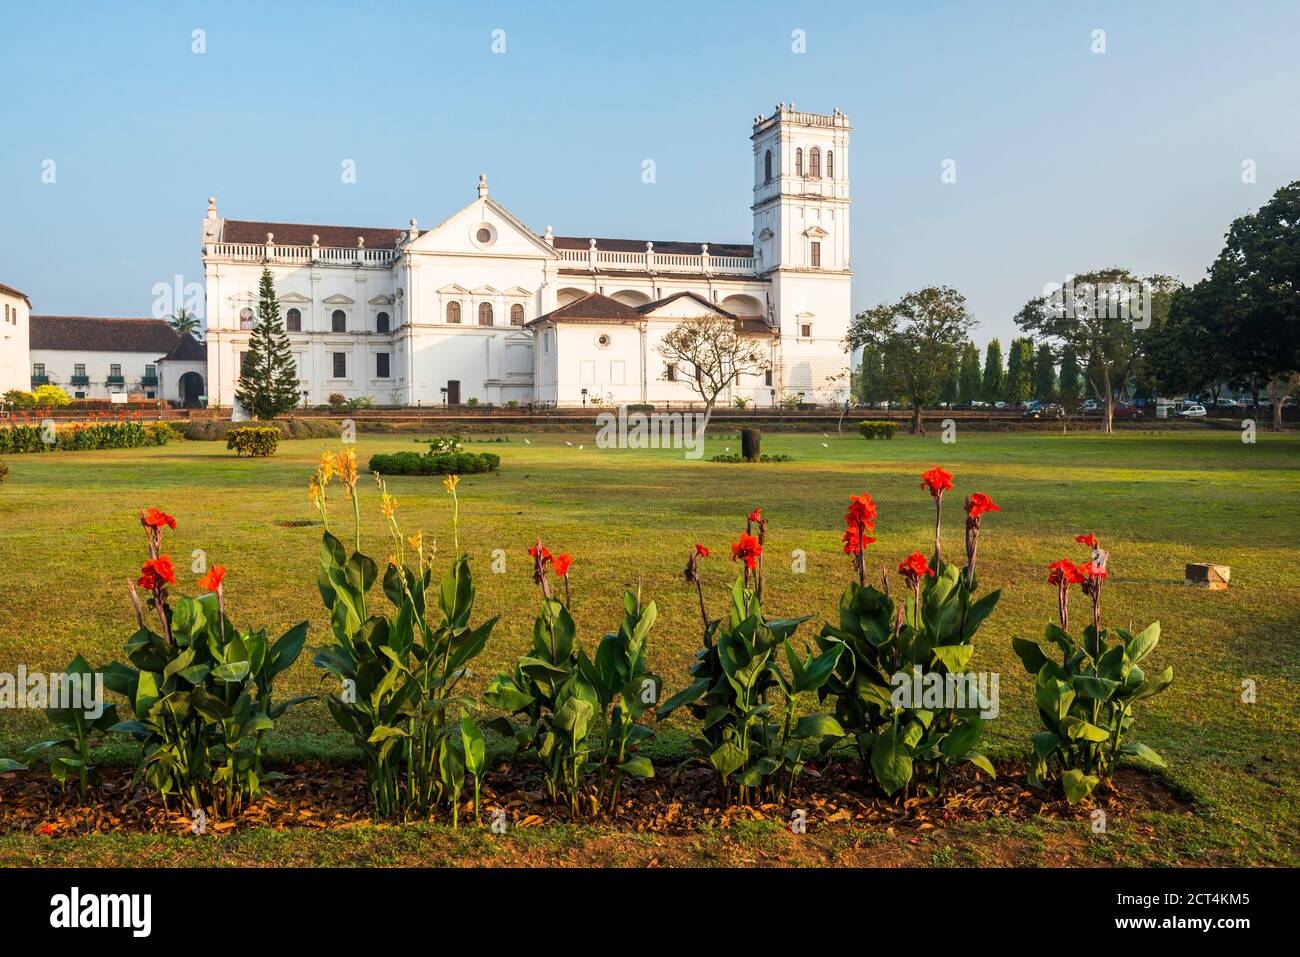 Se Catedral de Santa Catarina, a UNESCO World Heritage Site in Old Goa, Goa, India Stock Photo